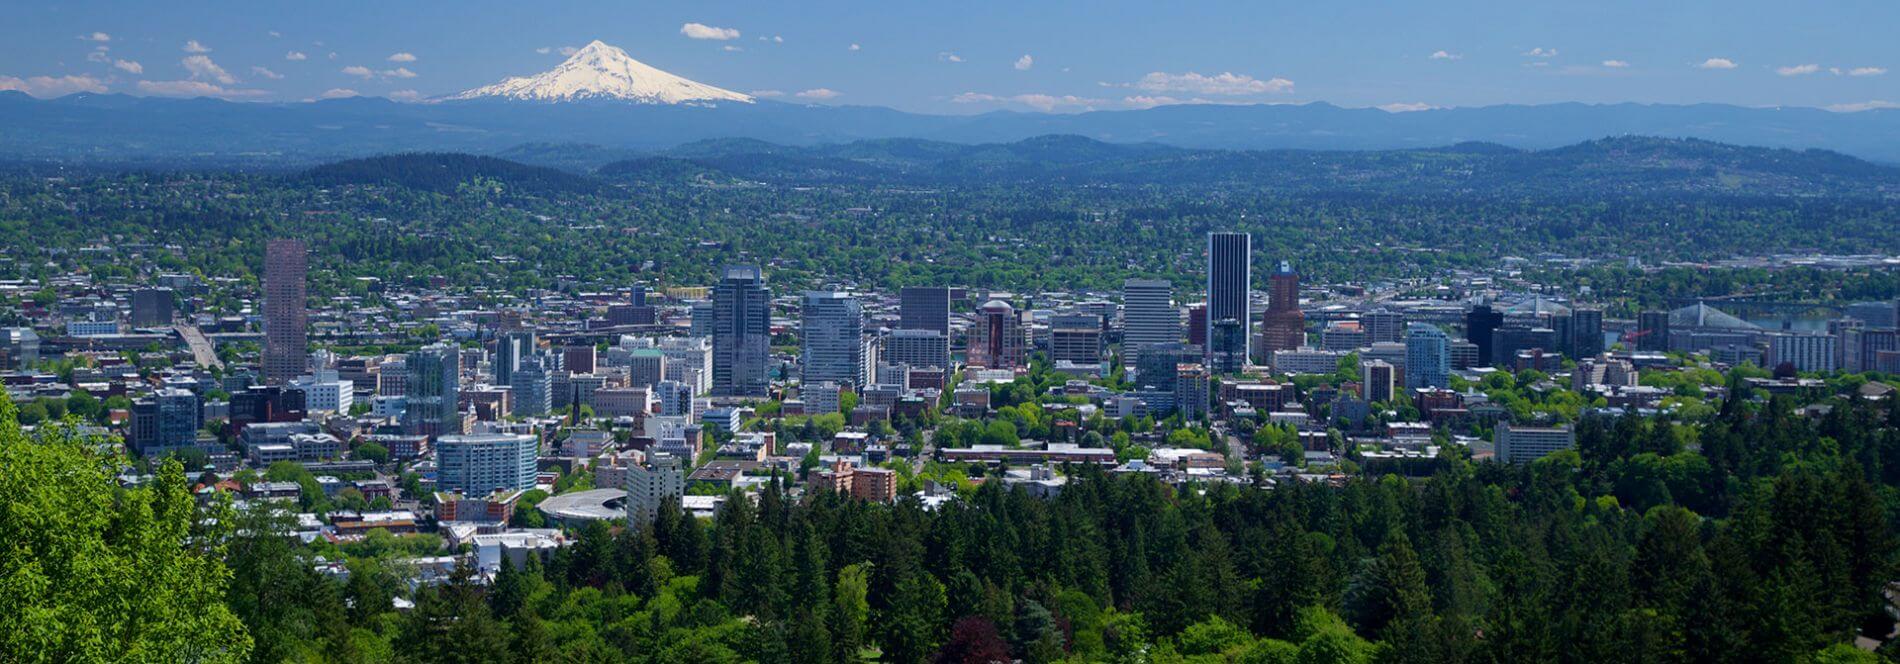 Skyline photo of Portland, OR.